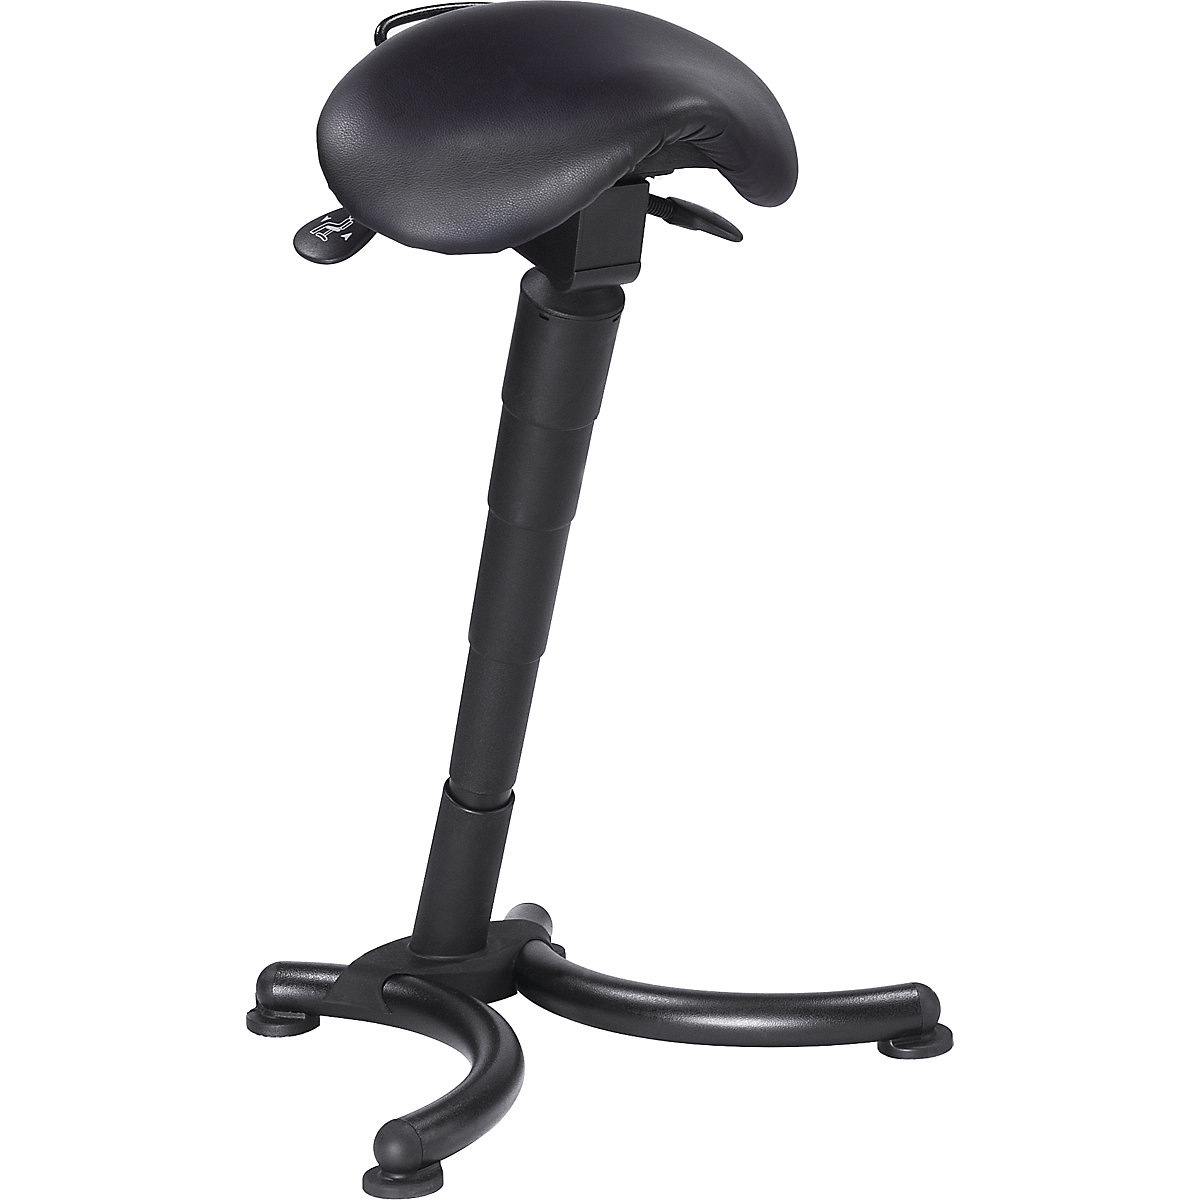 Anti-fatigue stool – meychair, ergonomic saddle seat, gas lift height adjustment